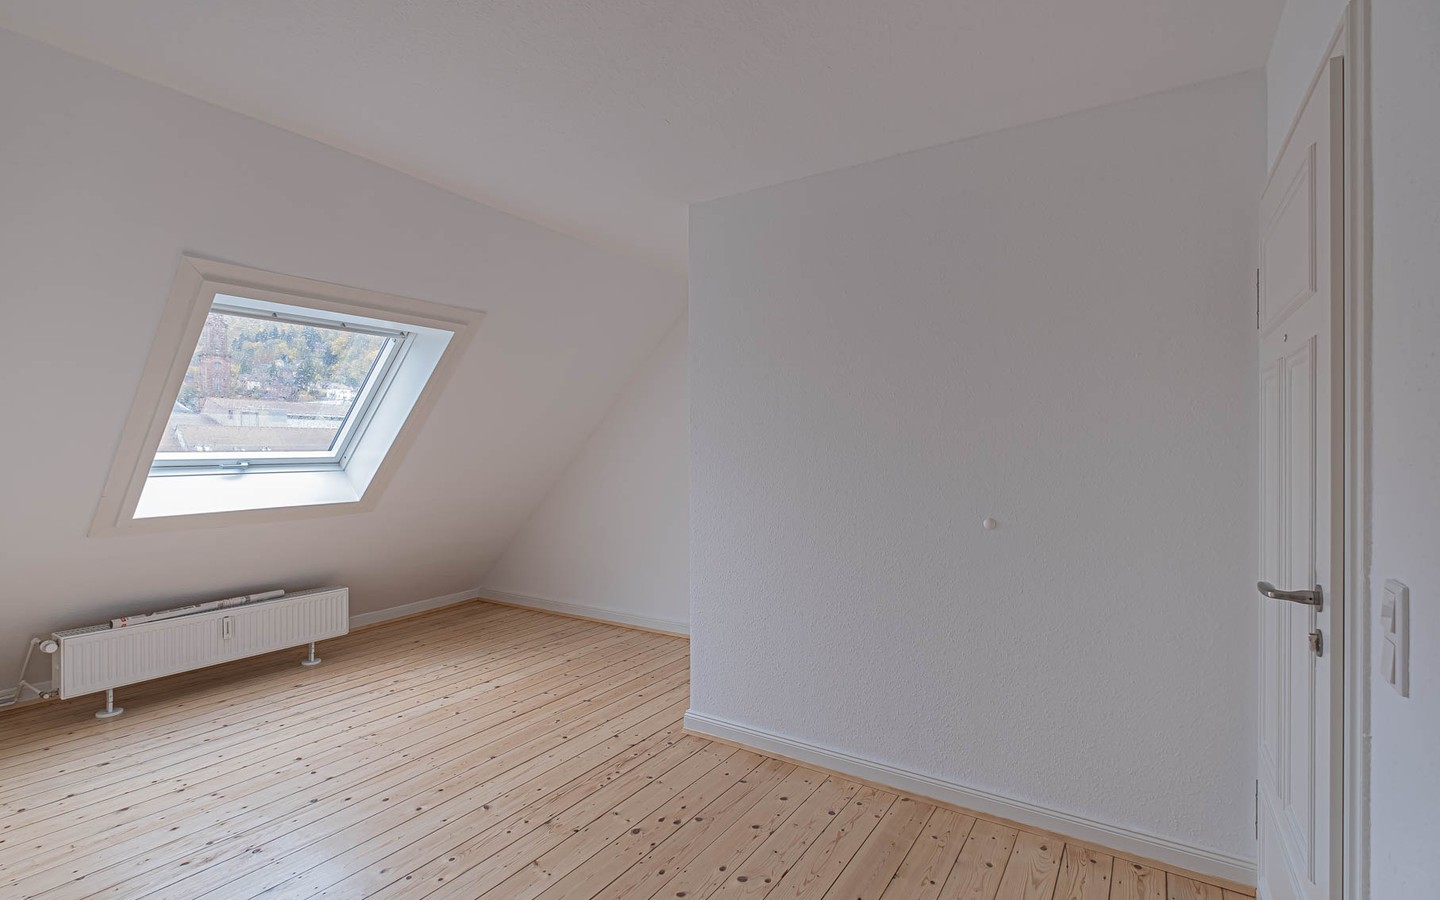 Wohndiele - Rarität – Dachgeschosswohnung mit Schlossblick -
 Ideal für kreative Singles oder Paare